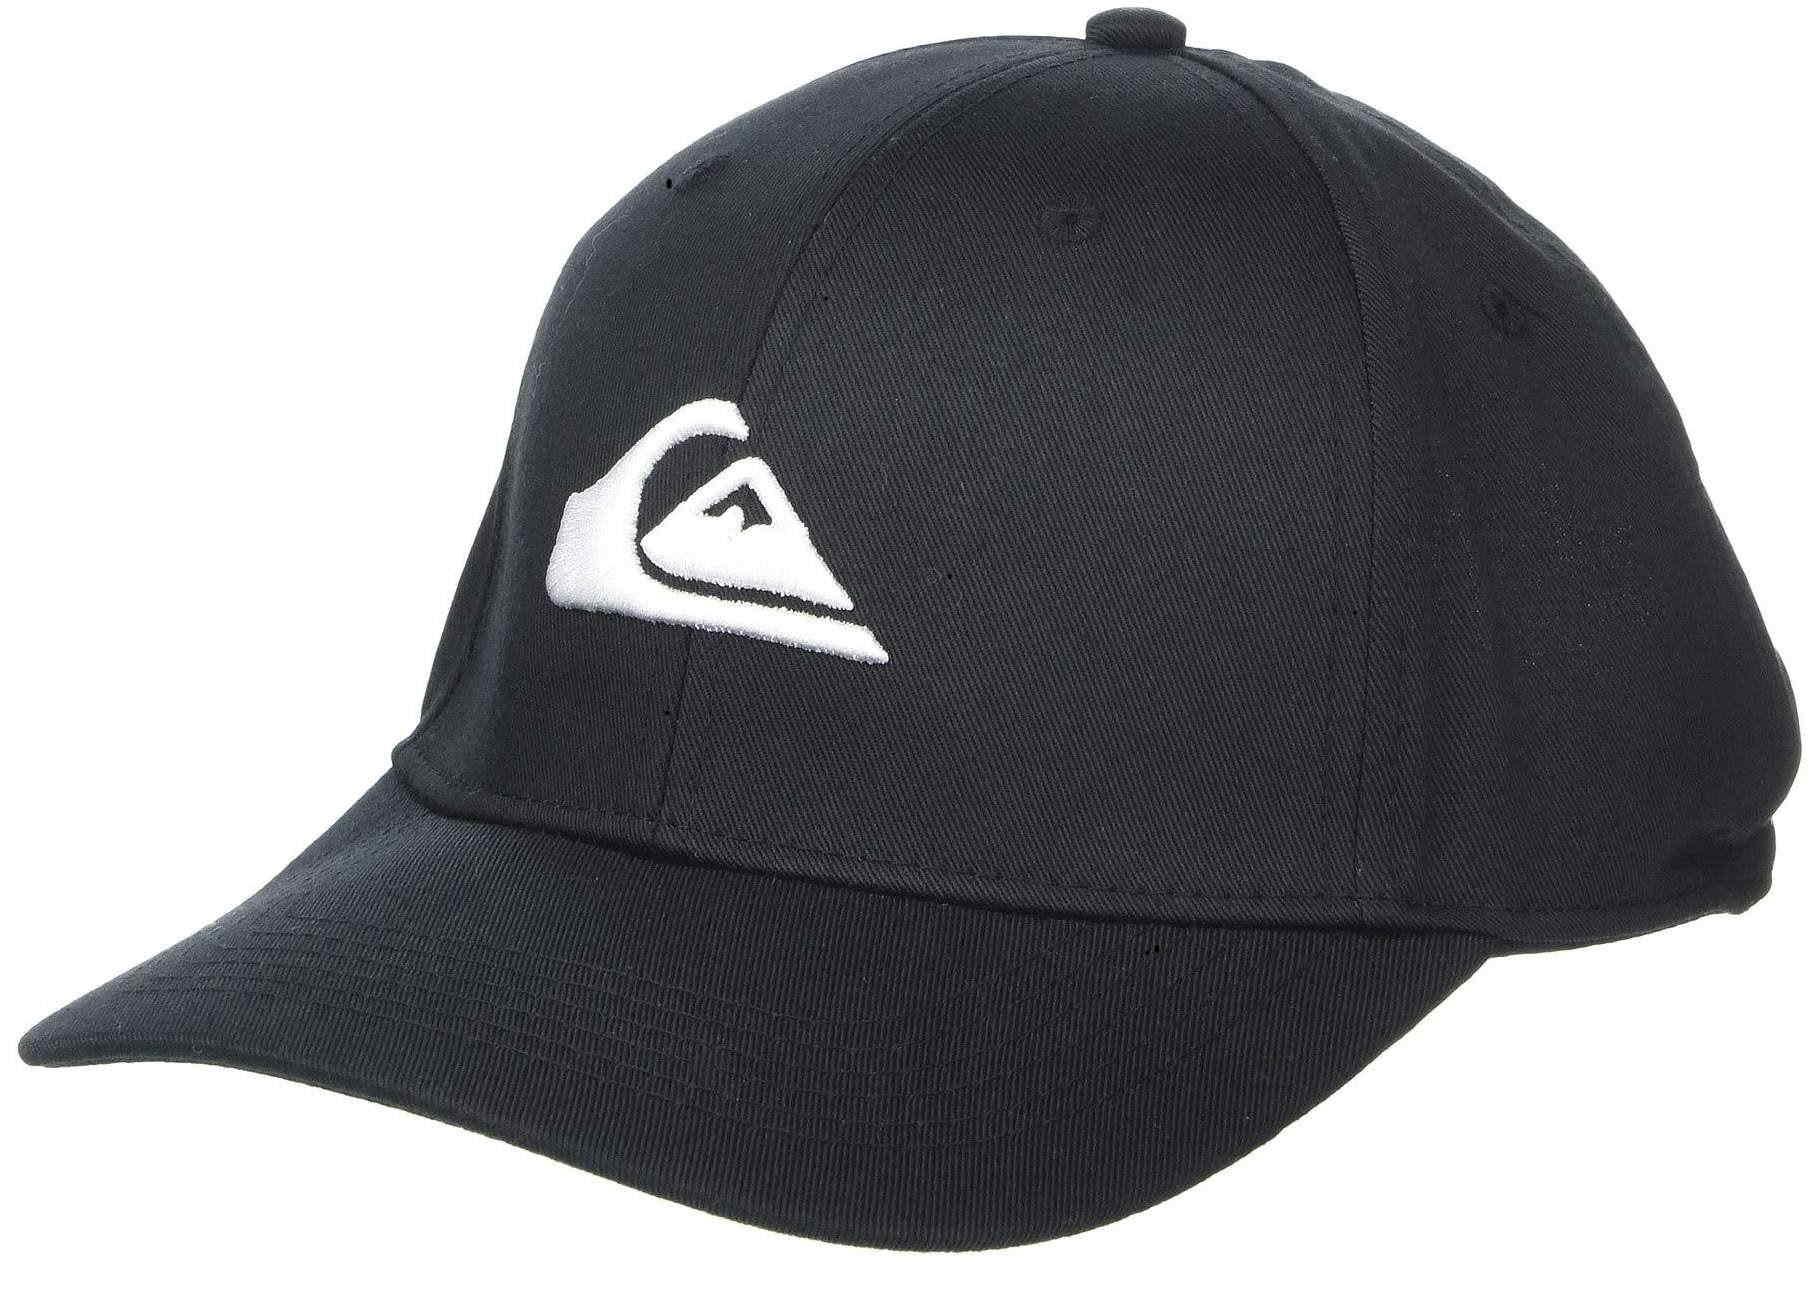  Decades Snapback Hat - Black